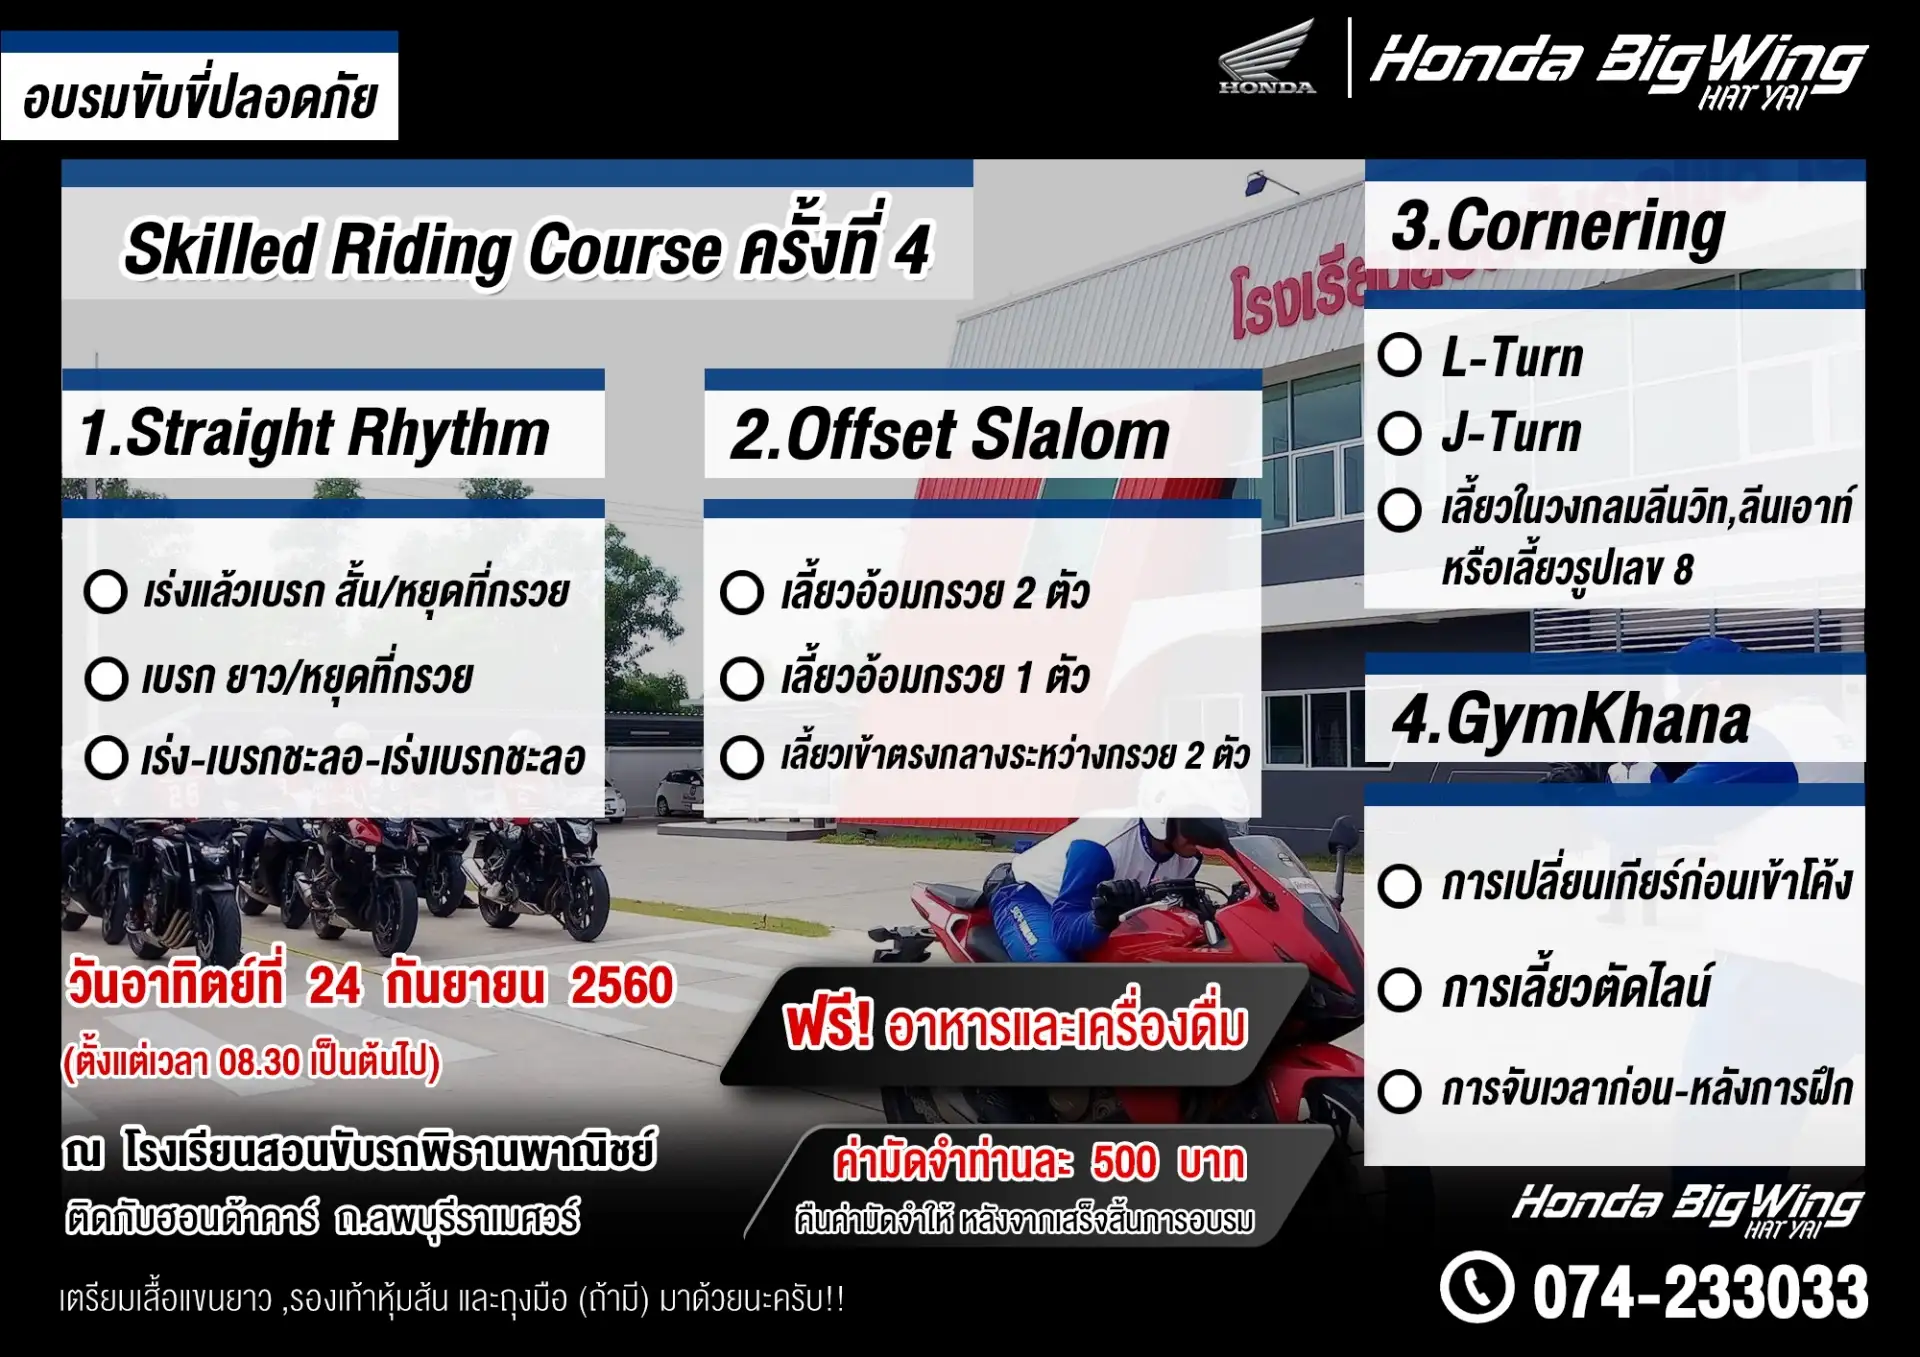 Honda Bigwing Hatyai เตรียมจัดกิจกรรมอบรมการขับขี่ Skill Riding Course